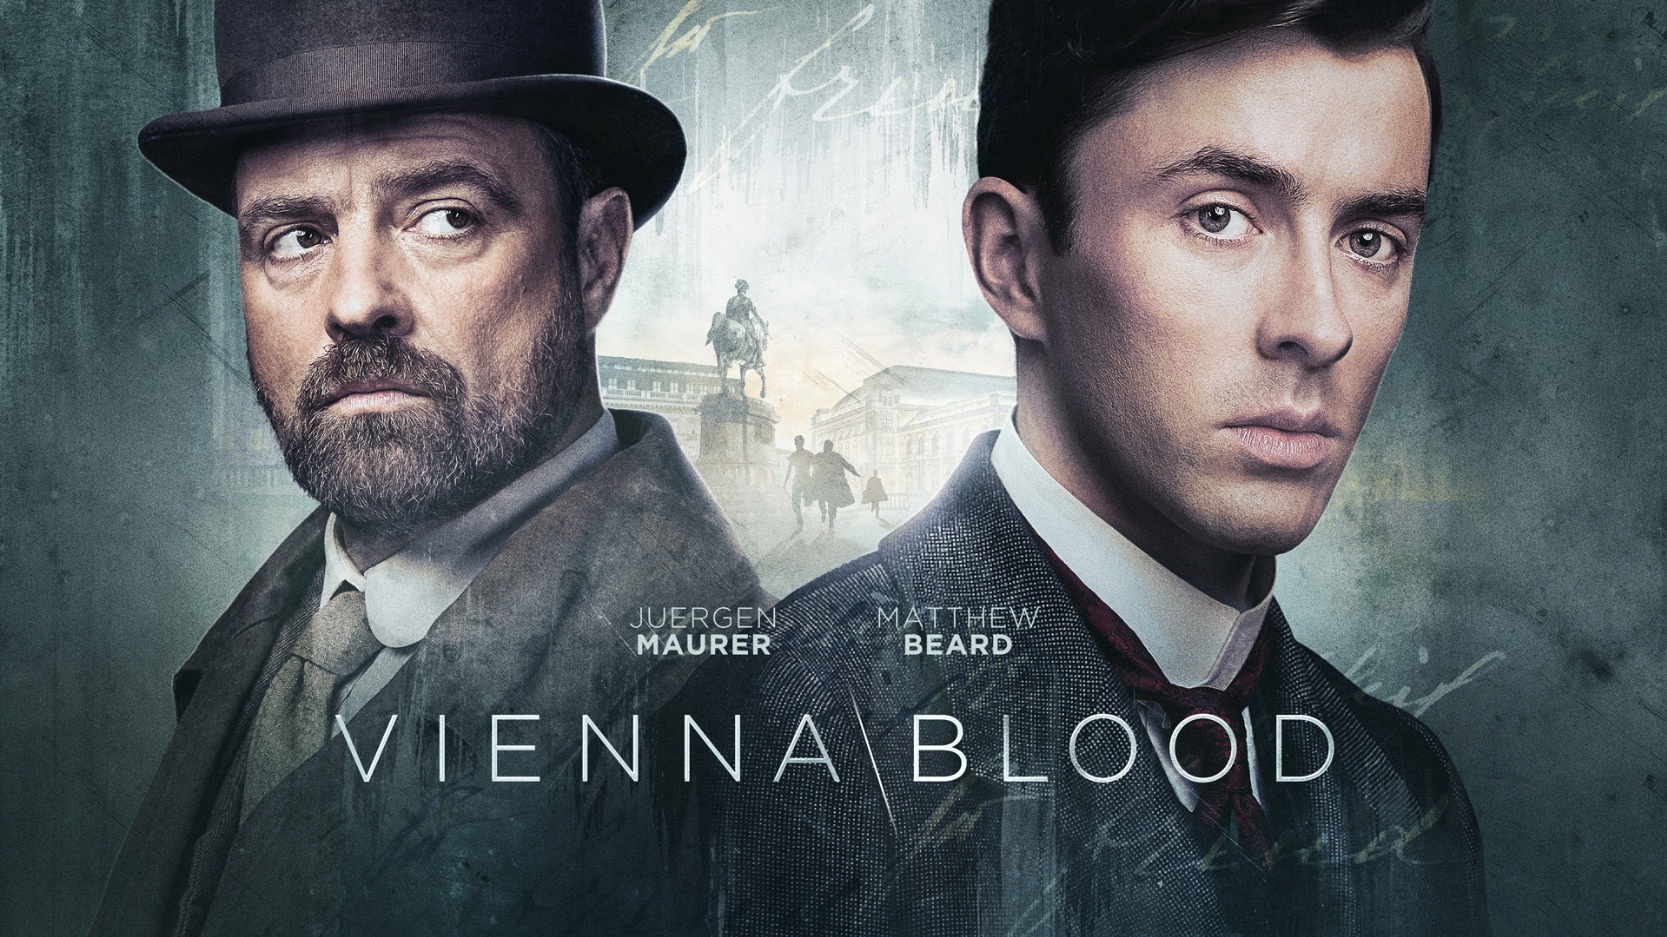 vienna blood season 2 review